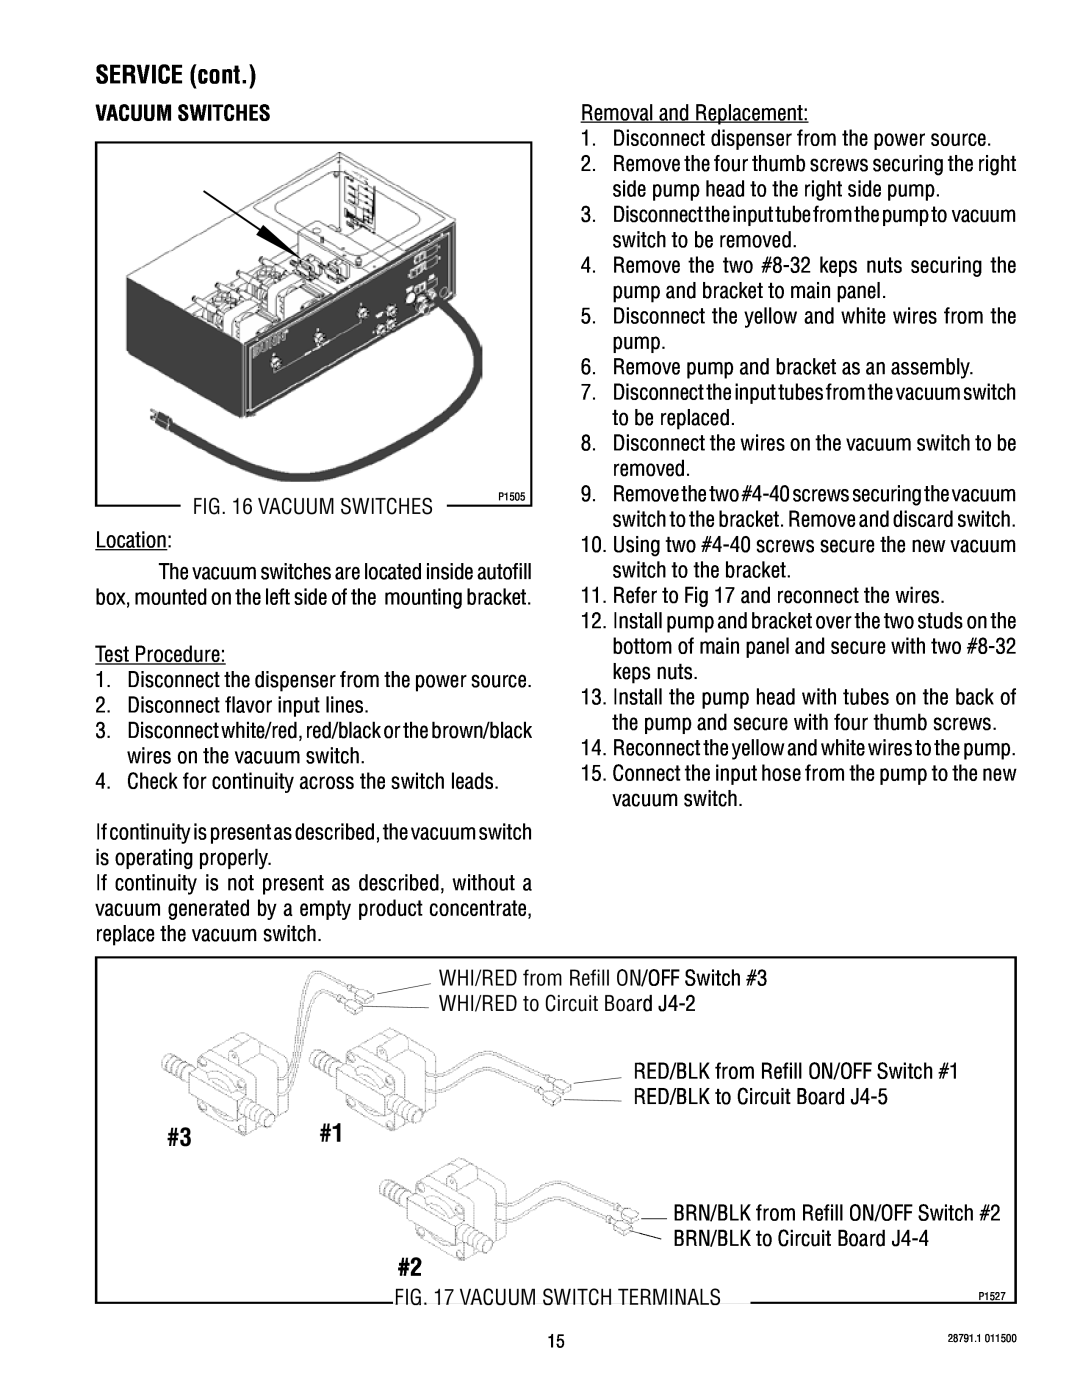 Bunn AF PR-3 service manual #3#1, Vacuum Switches, SERVICE cont 